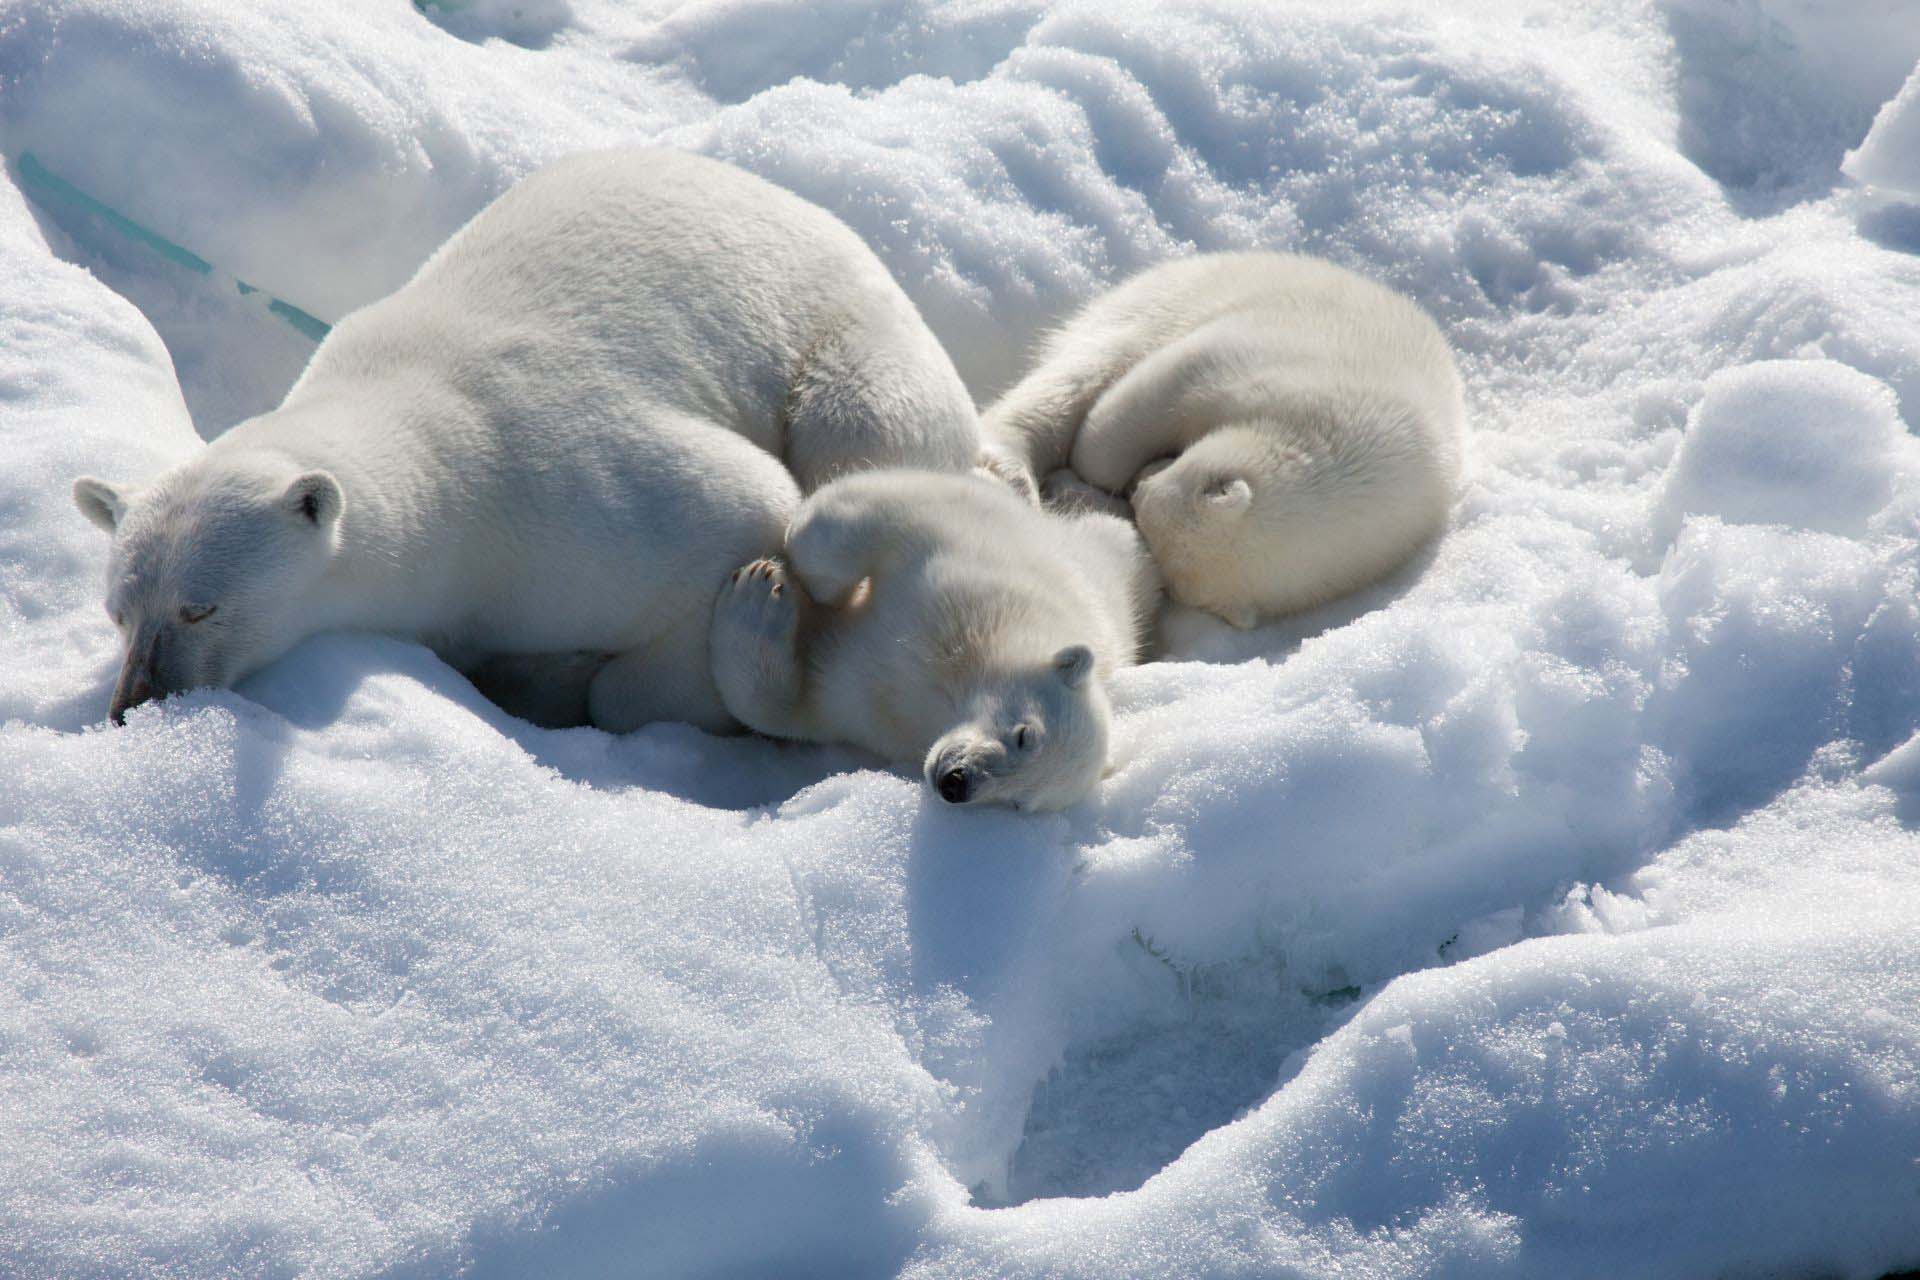 Arctic white Polar bears